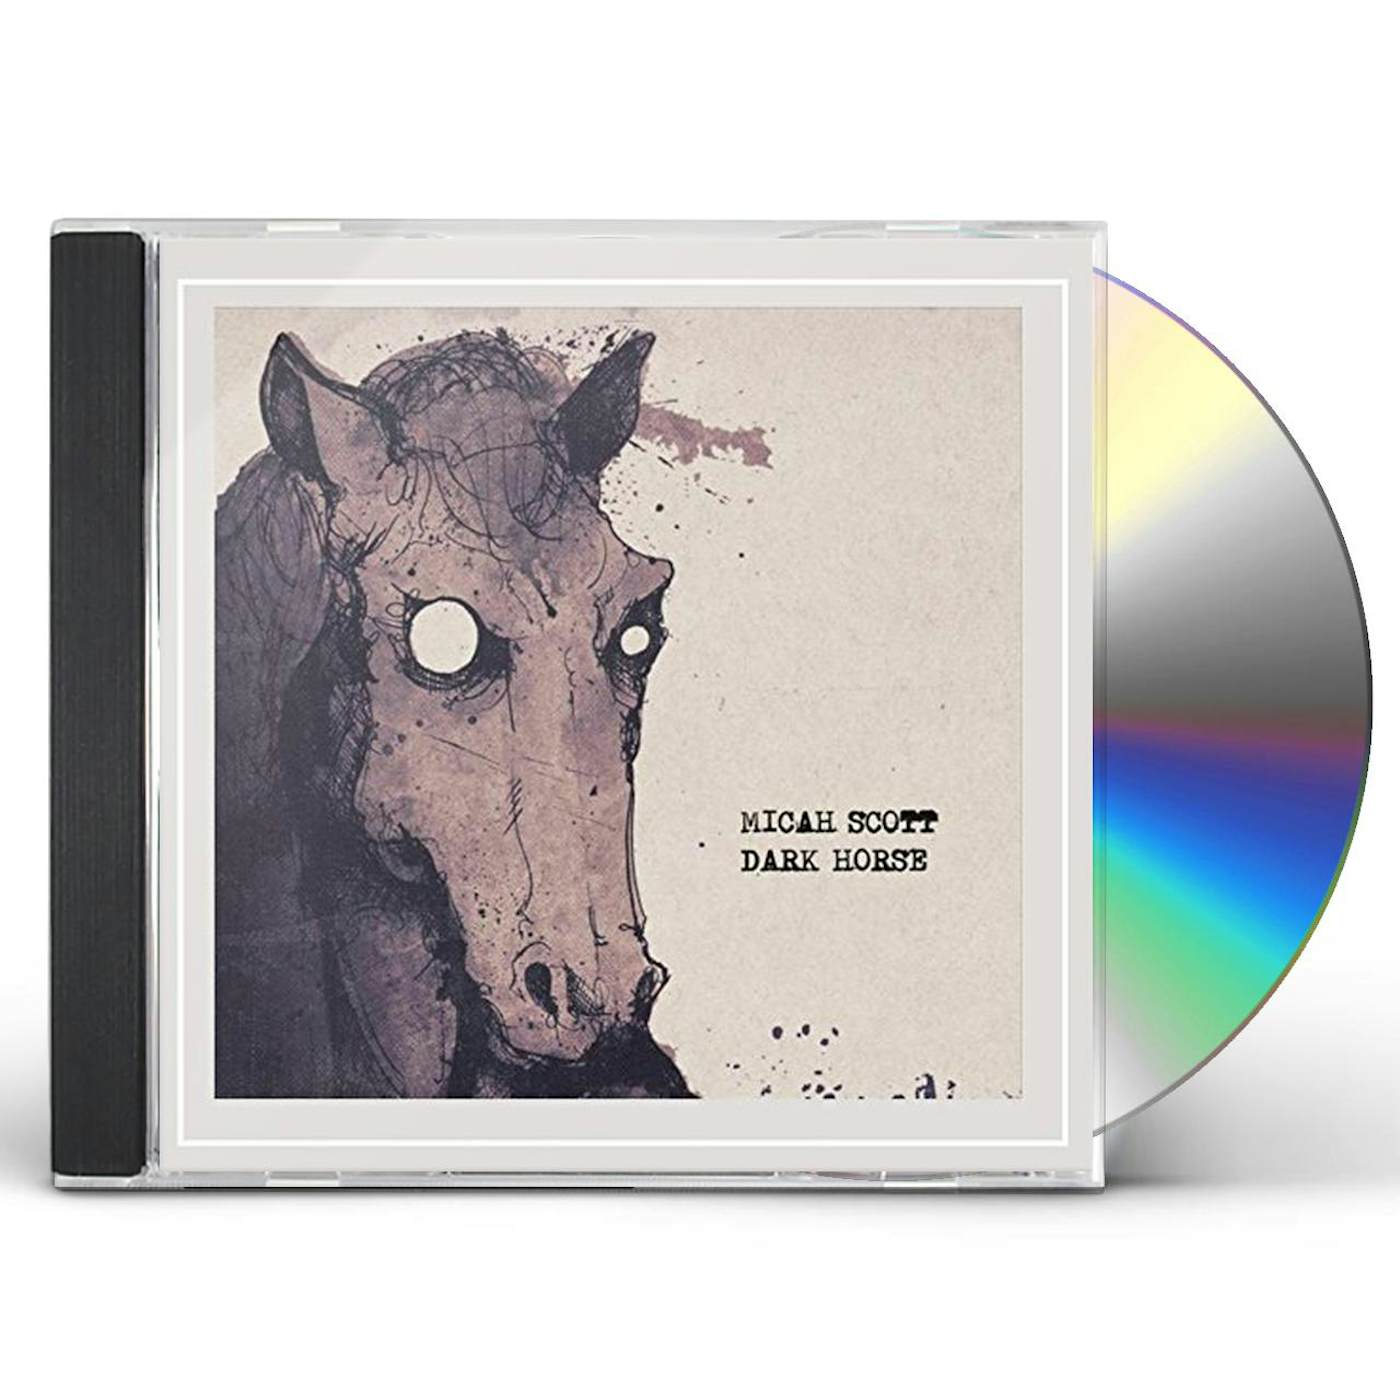 Micah Scott DARK HORSE CD